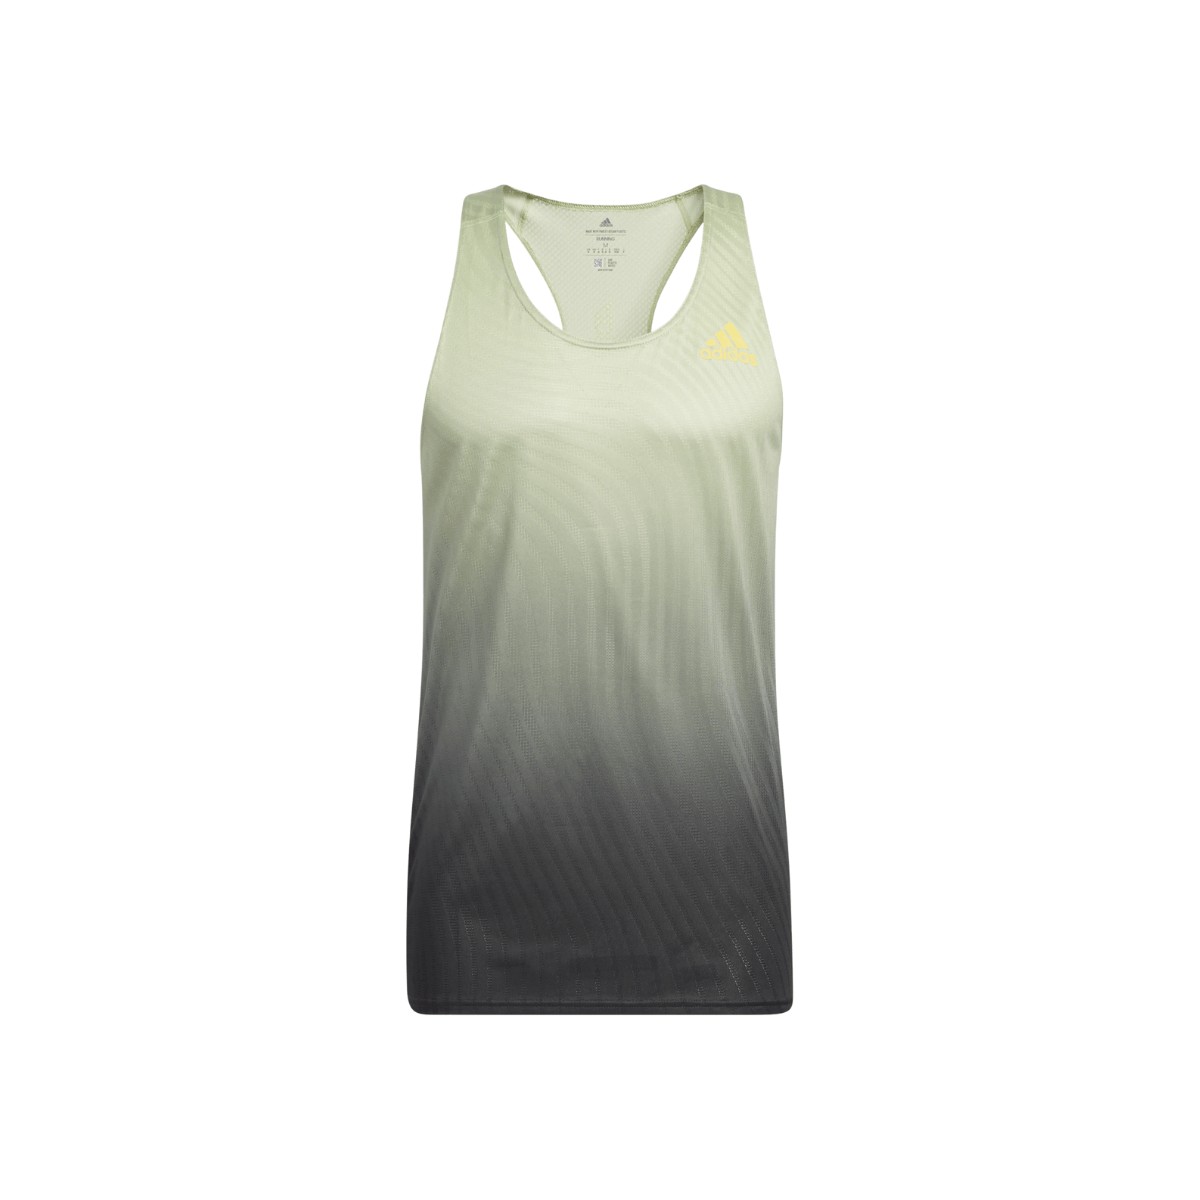 Adidas Adizero Engineered Singlet - T-shirt sans manches - Jaune et gris, Taille XS